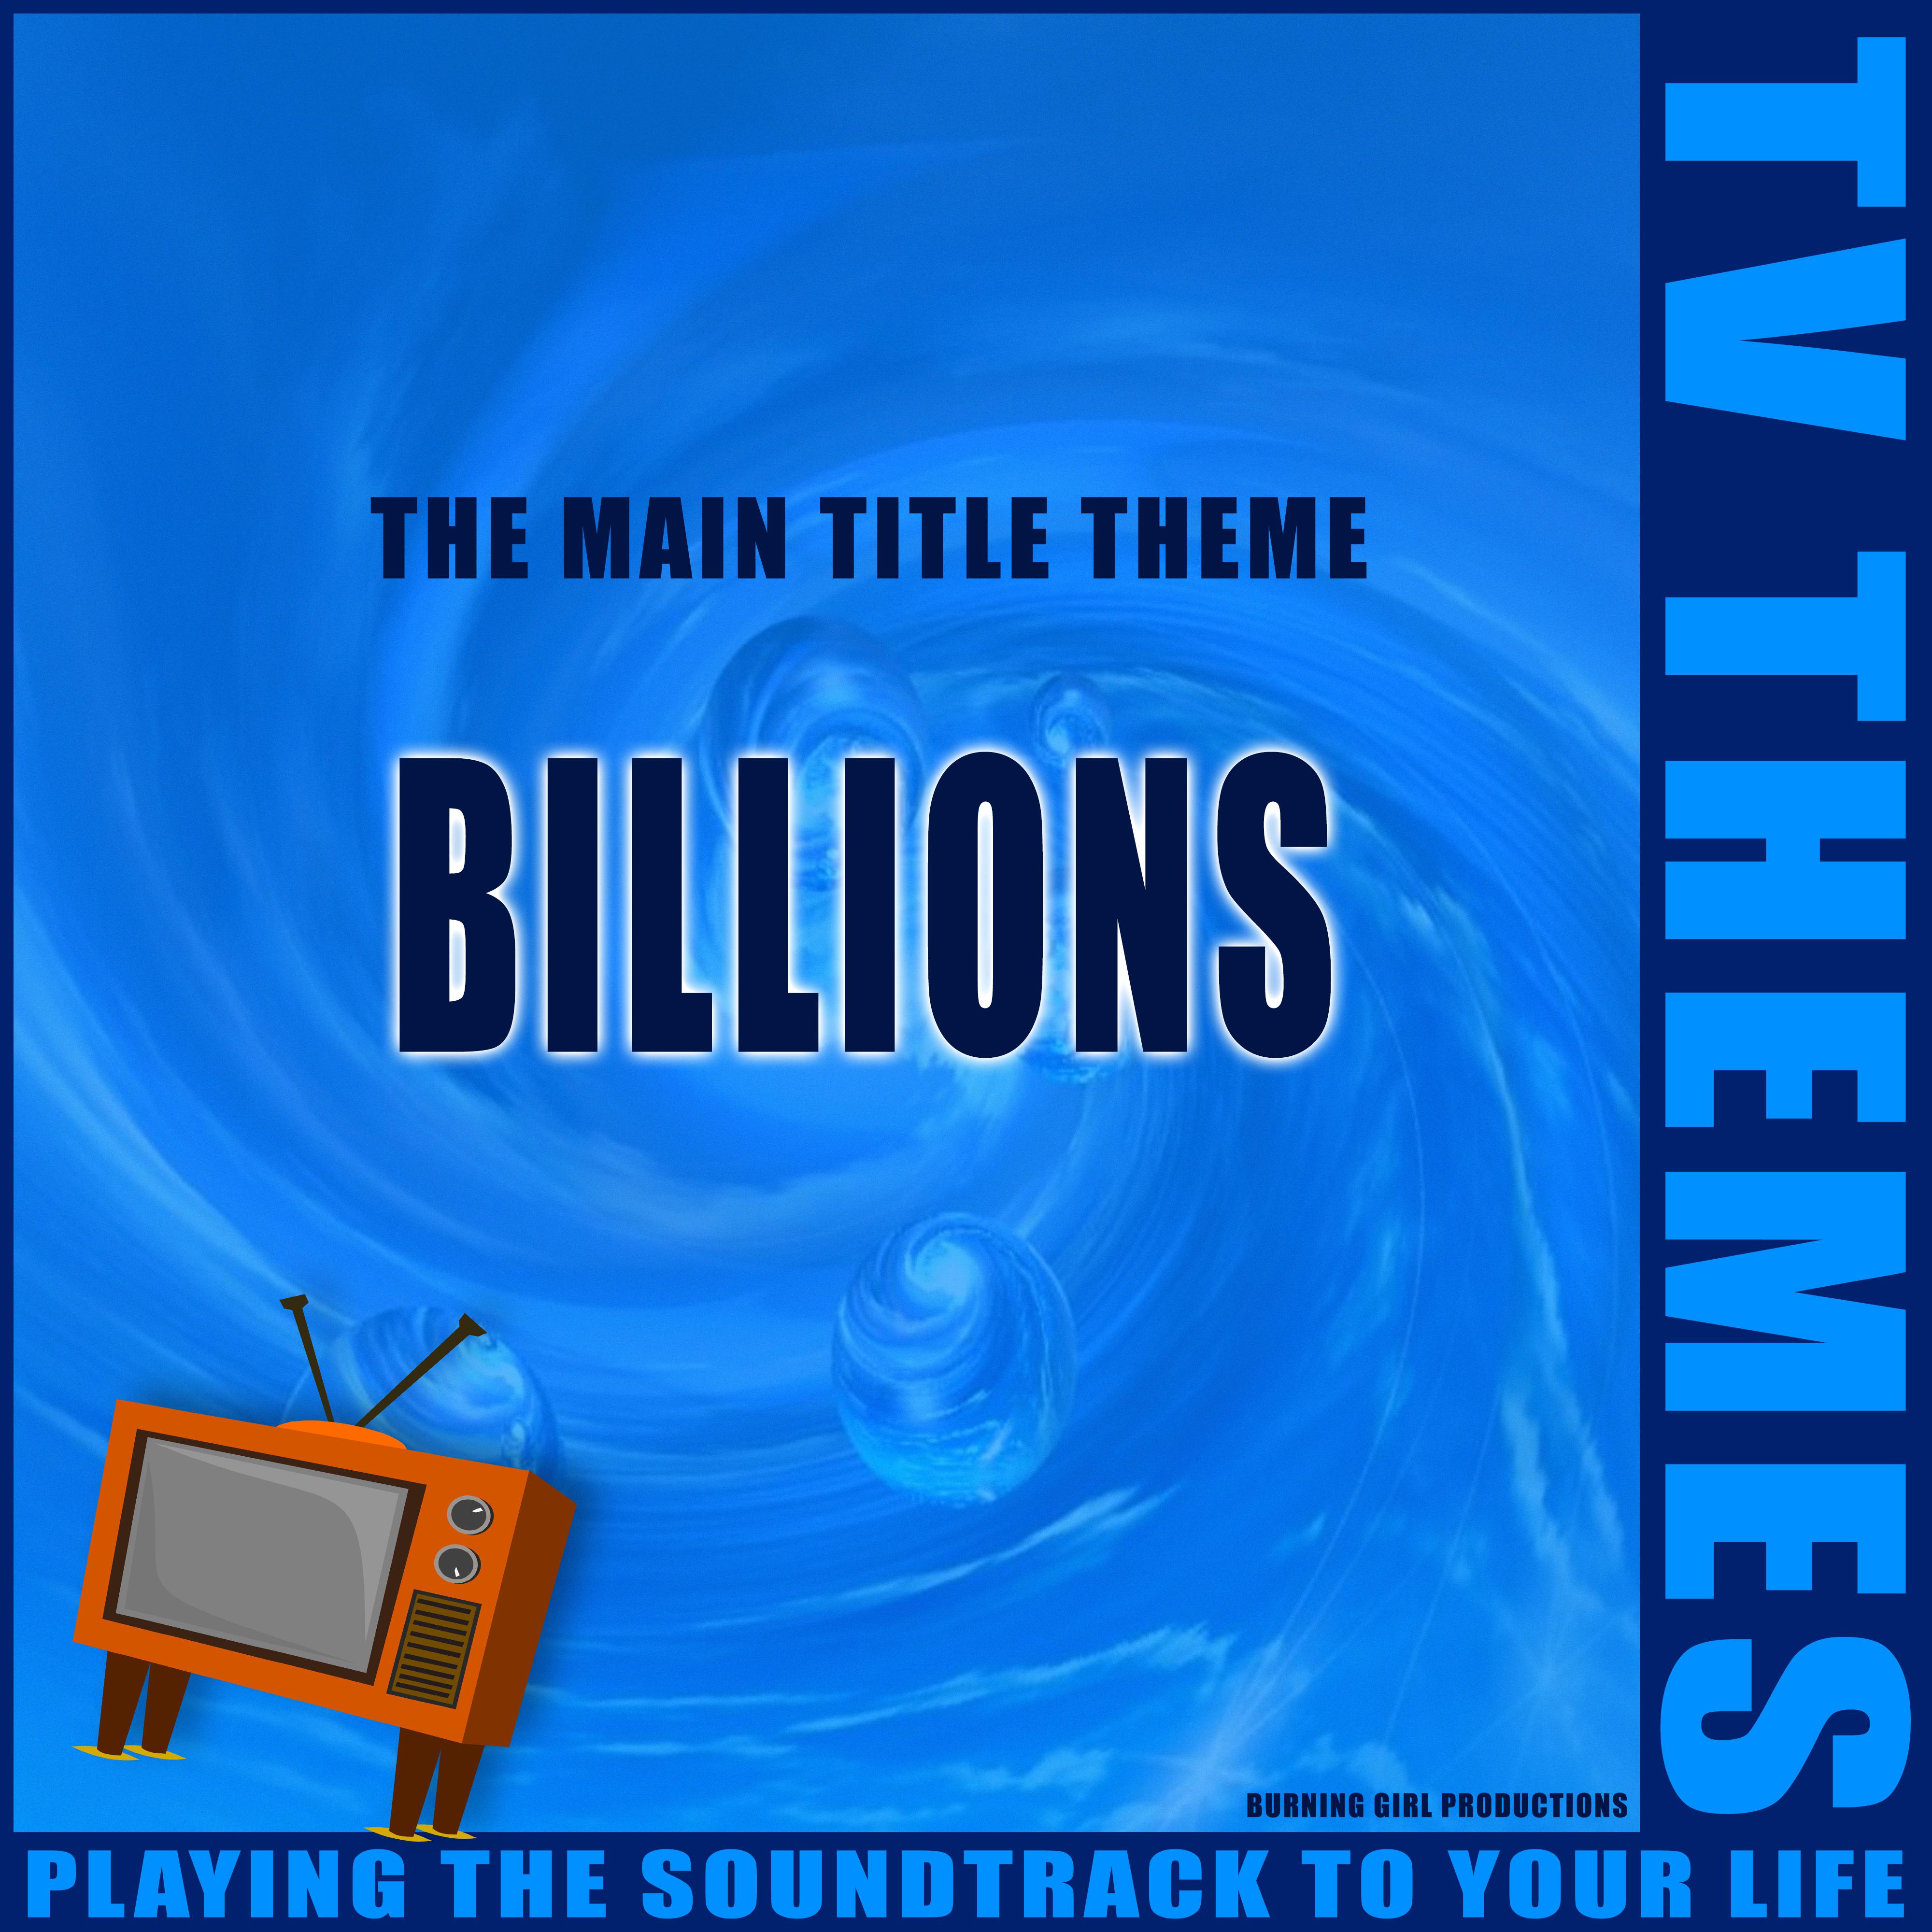 The Main Title Theme - Billions